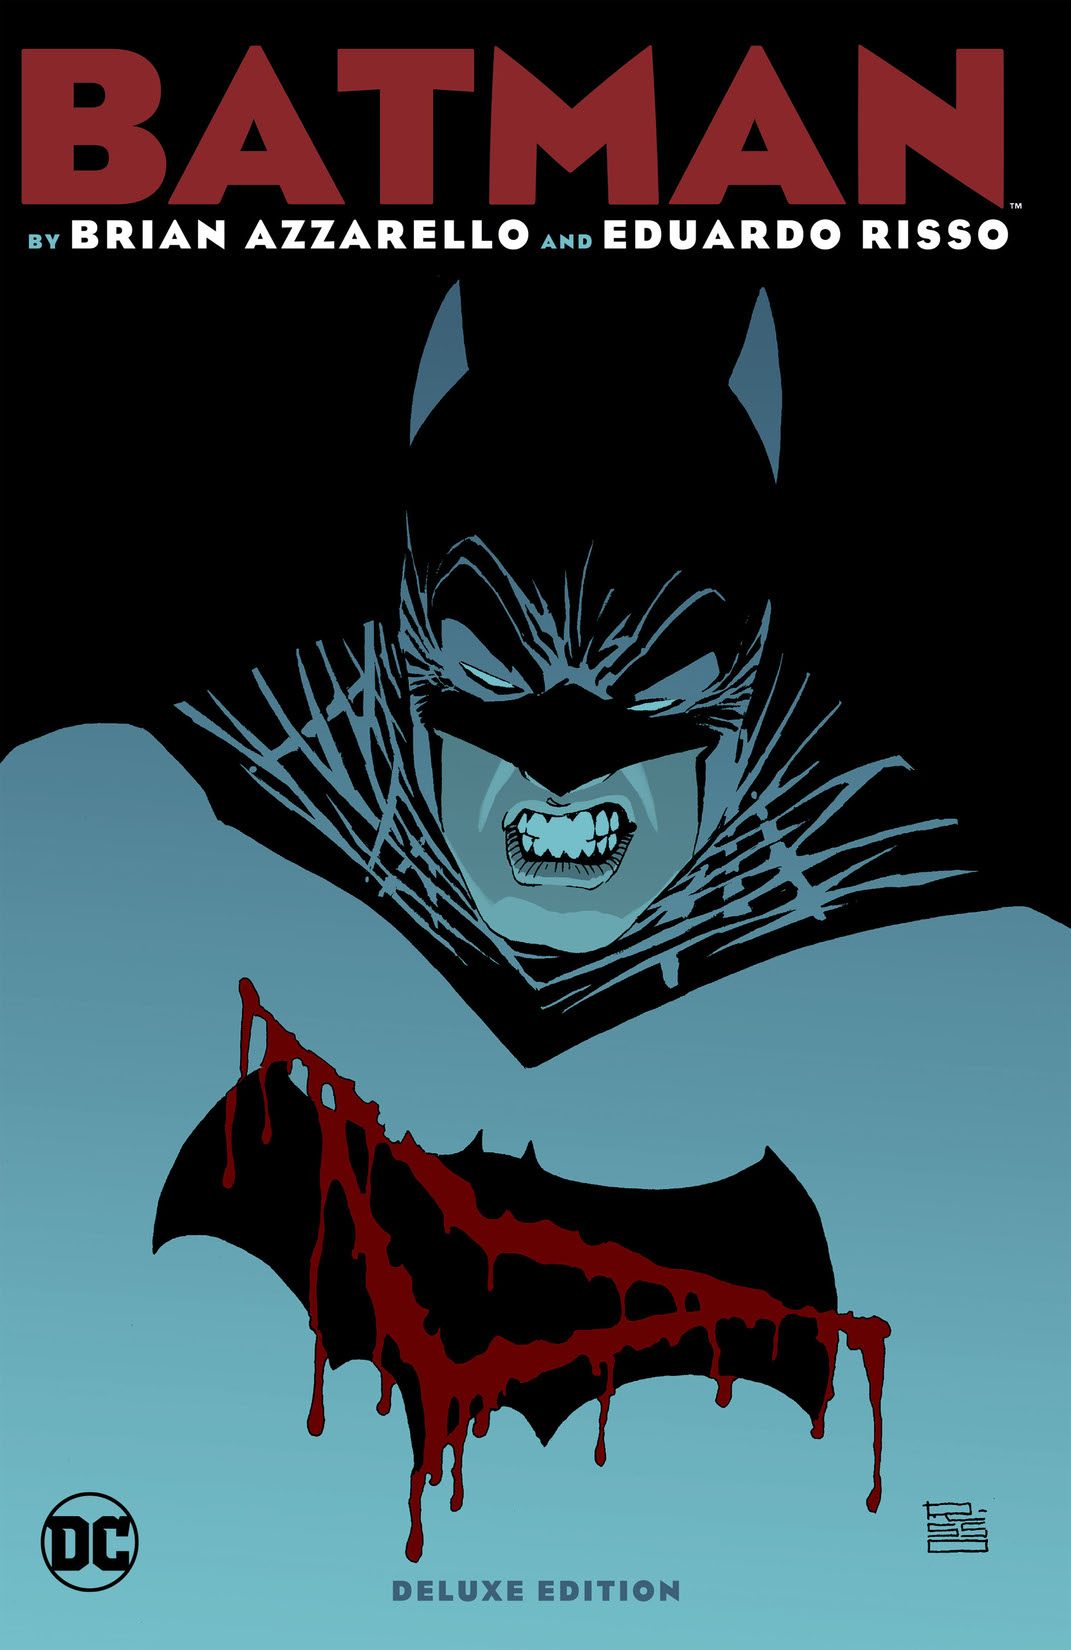 Batman by Azzarello & Risso Deluxe Edition preview images